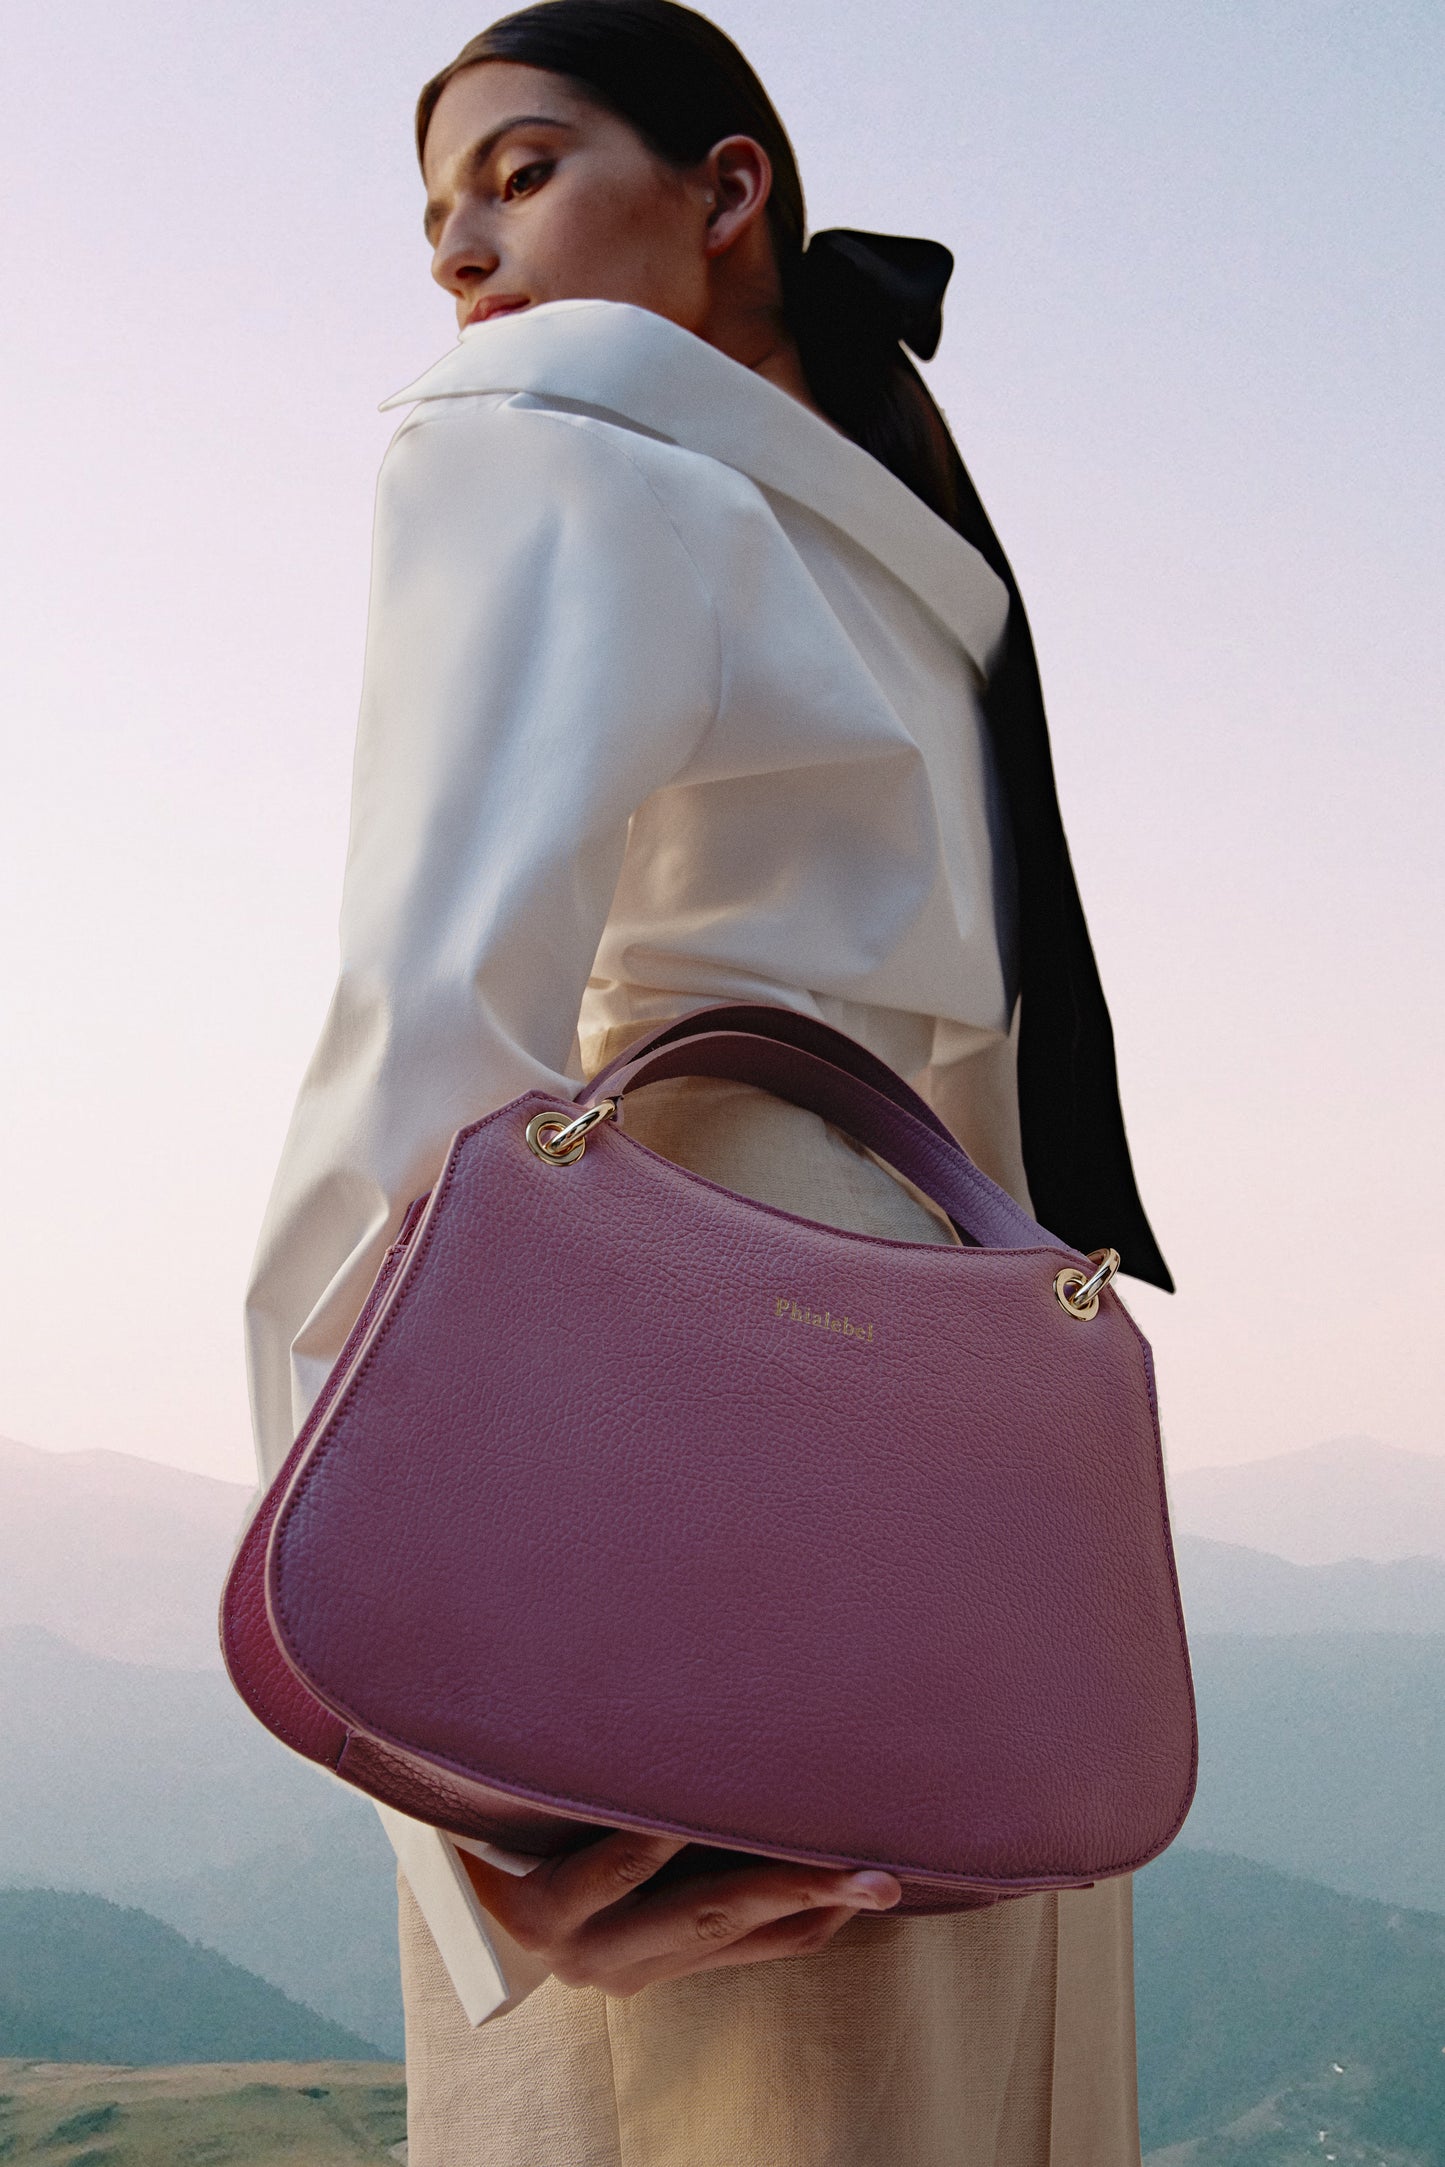 Mujer sosteniendo un bolso de mano rosa